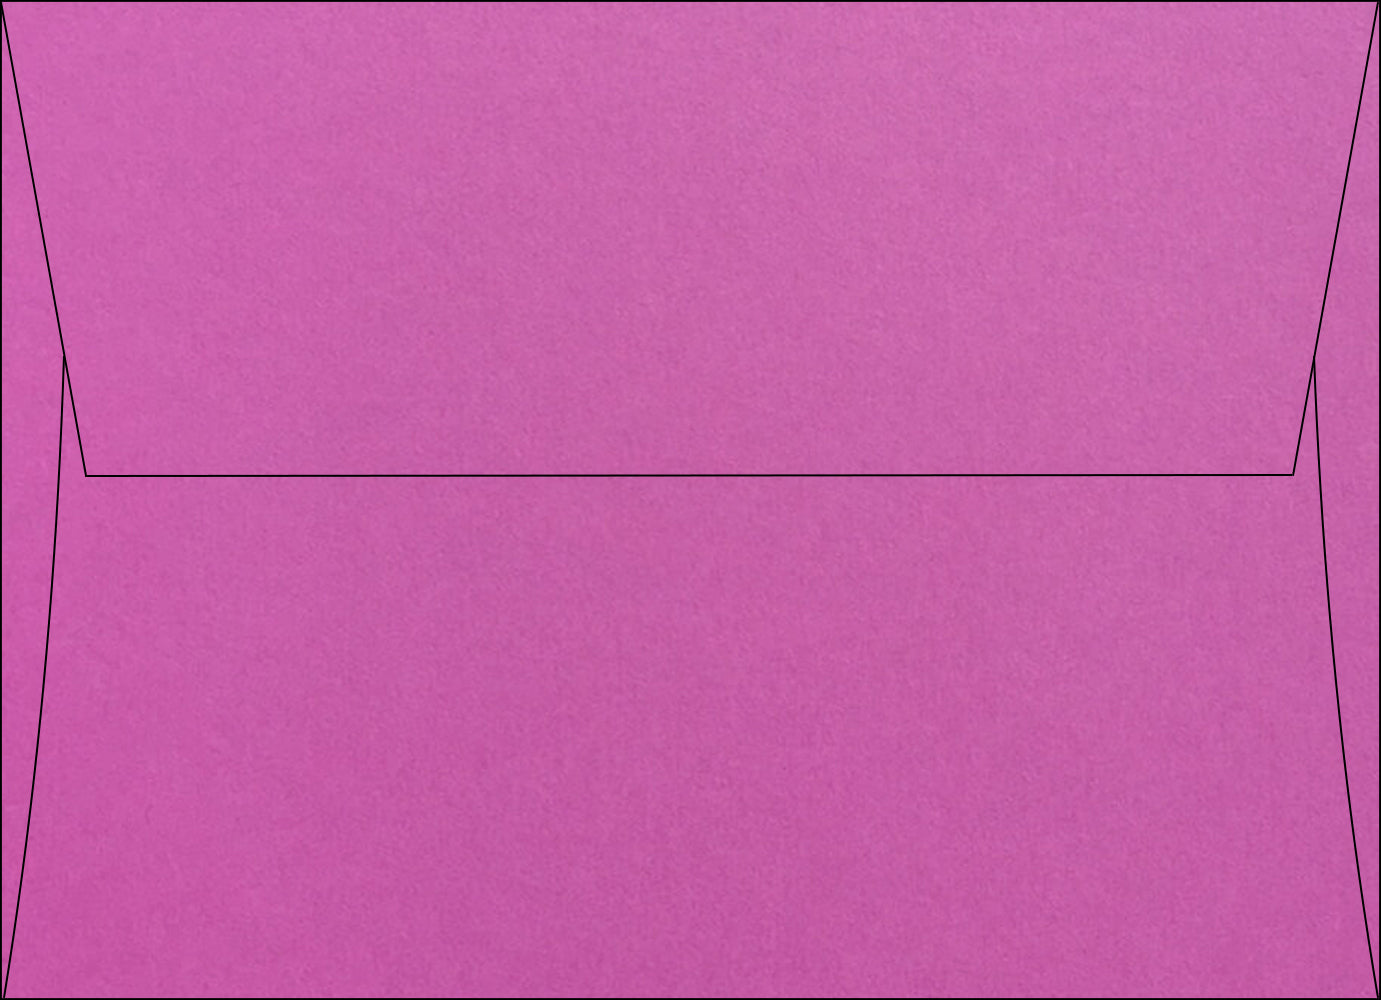 Glo-Tone Envelope Samples